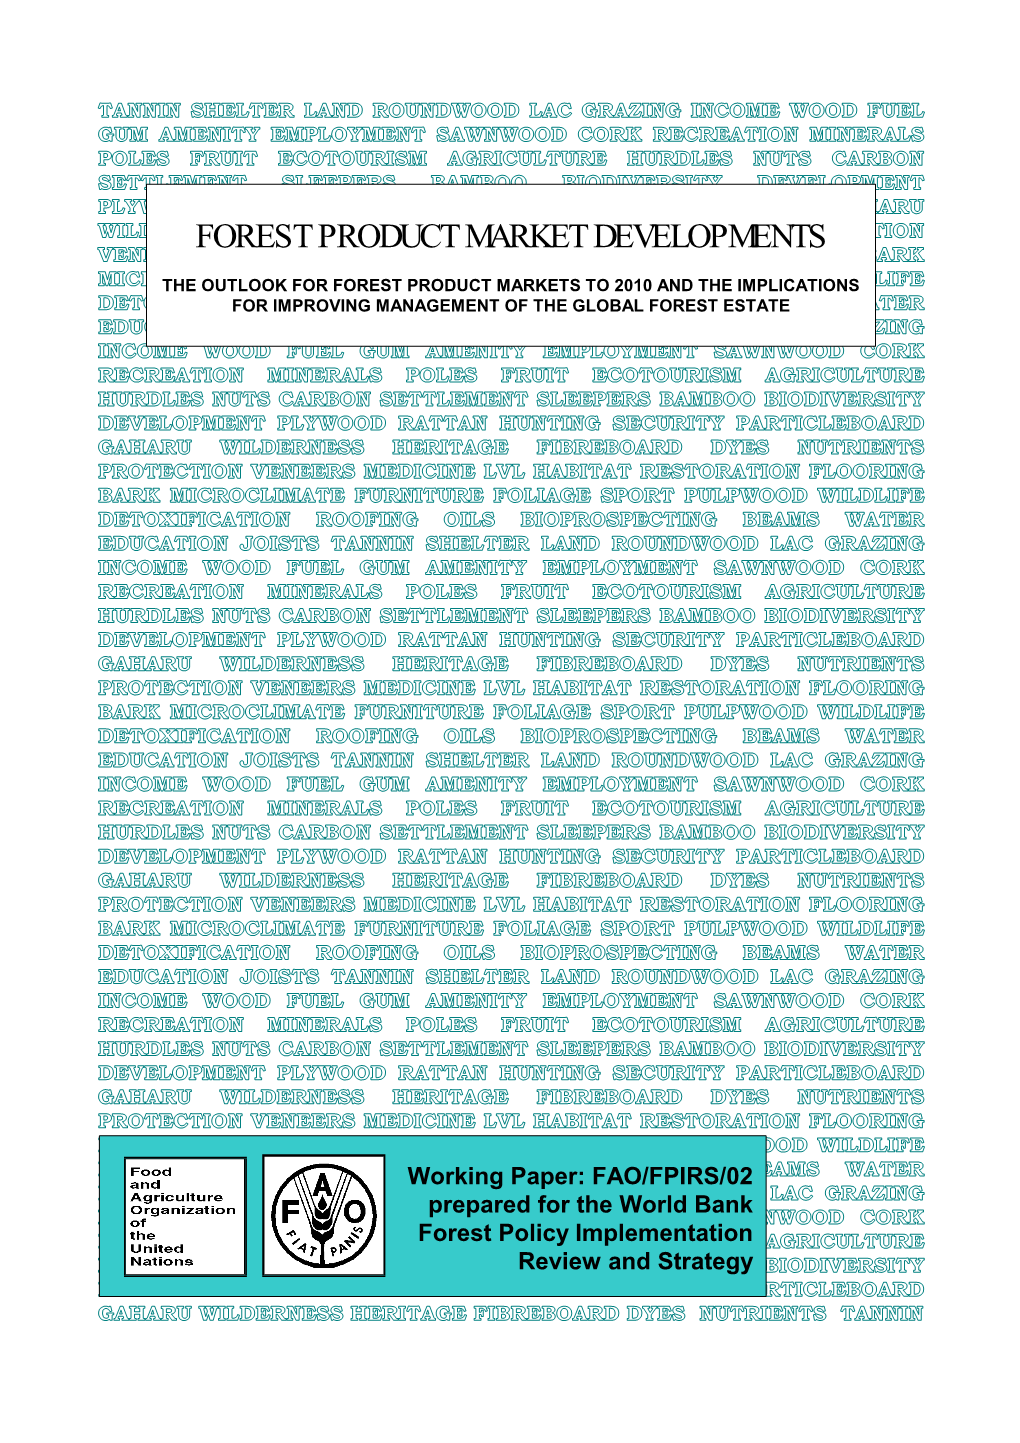 Forest Product Market Developments